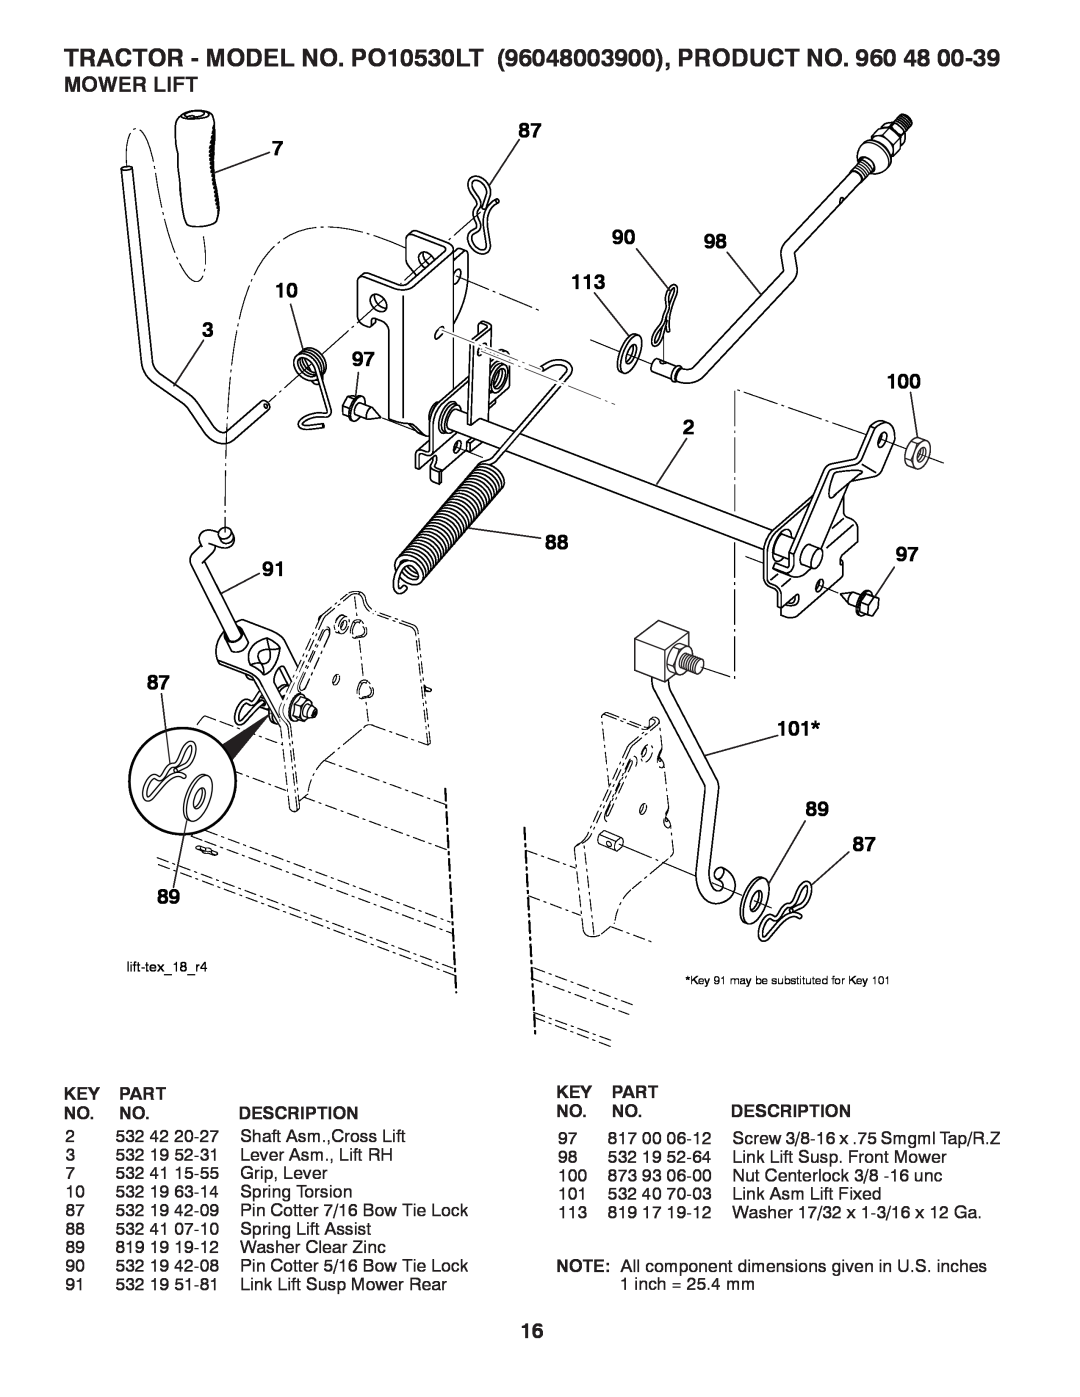 Poulan manual Mower Lift, TRACTOR - MODEL NO. PO10530LT 96048003900, PRODUCT NO. 960 48, lift-tex18r4 